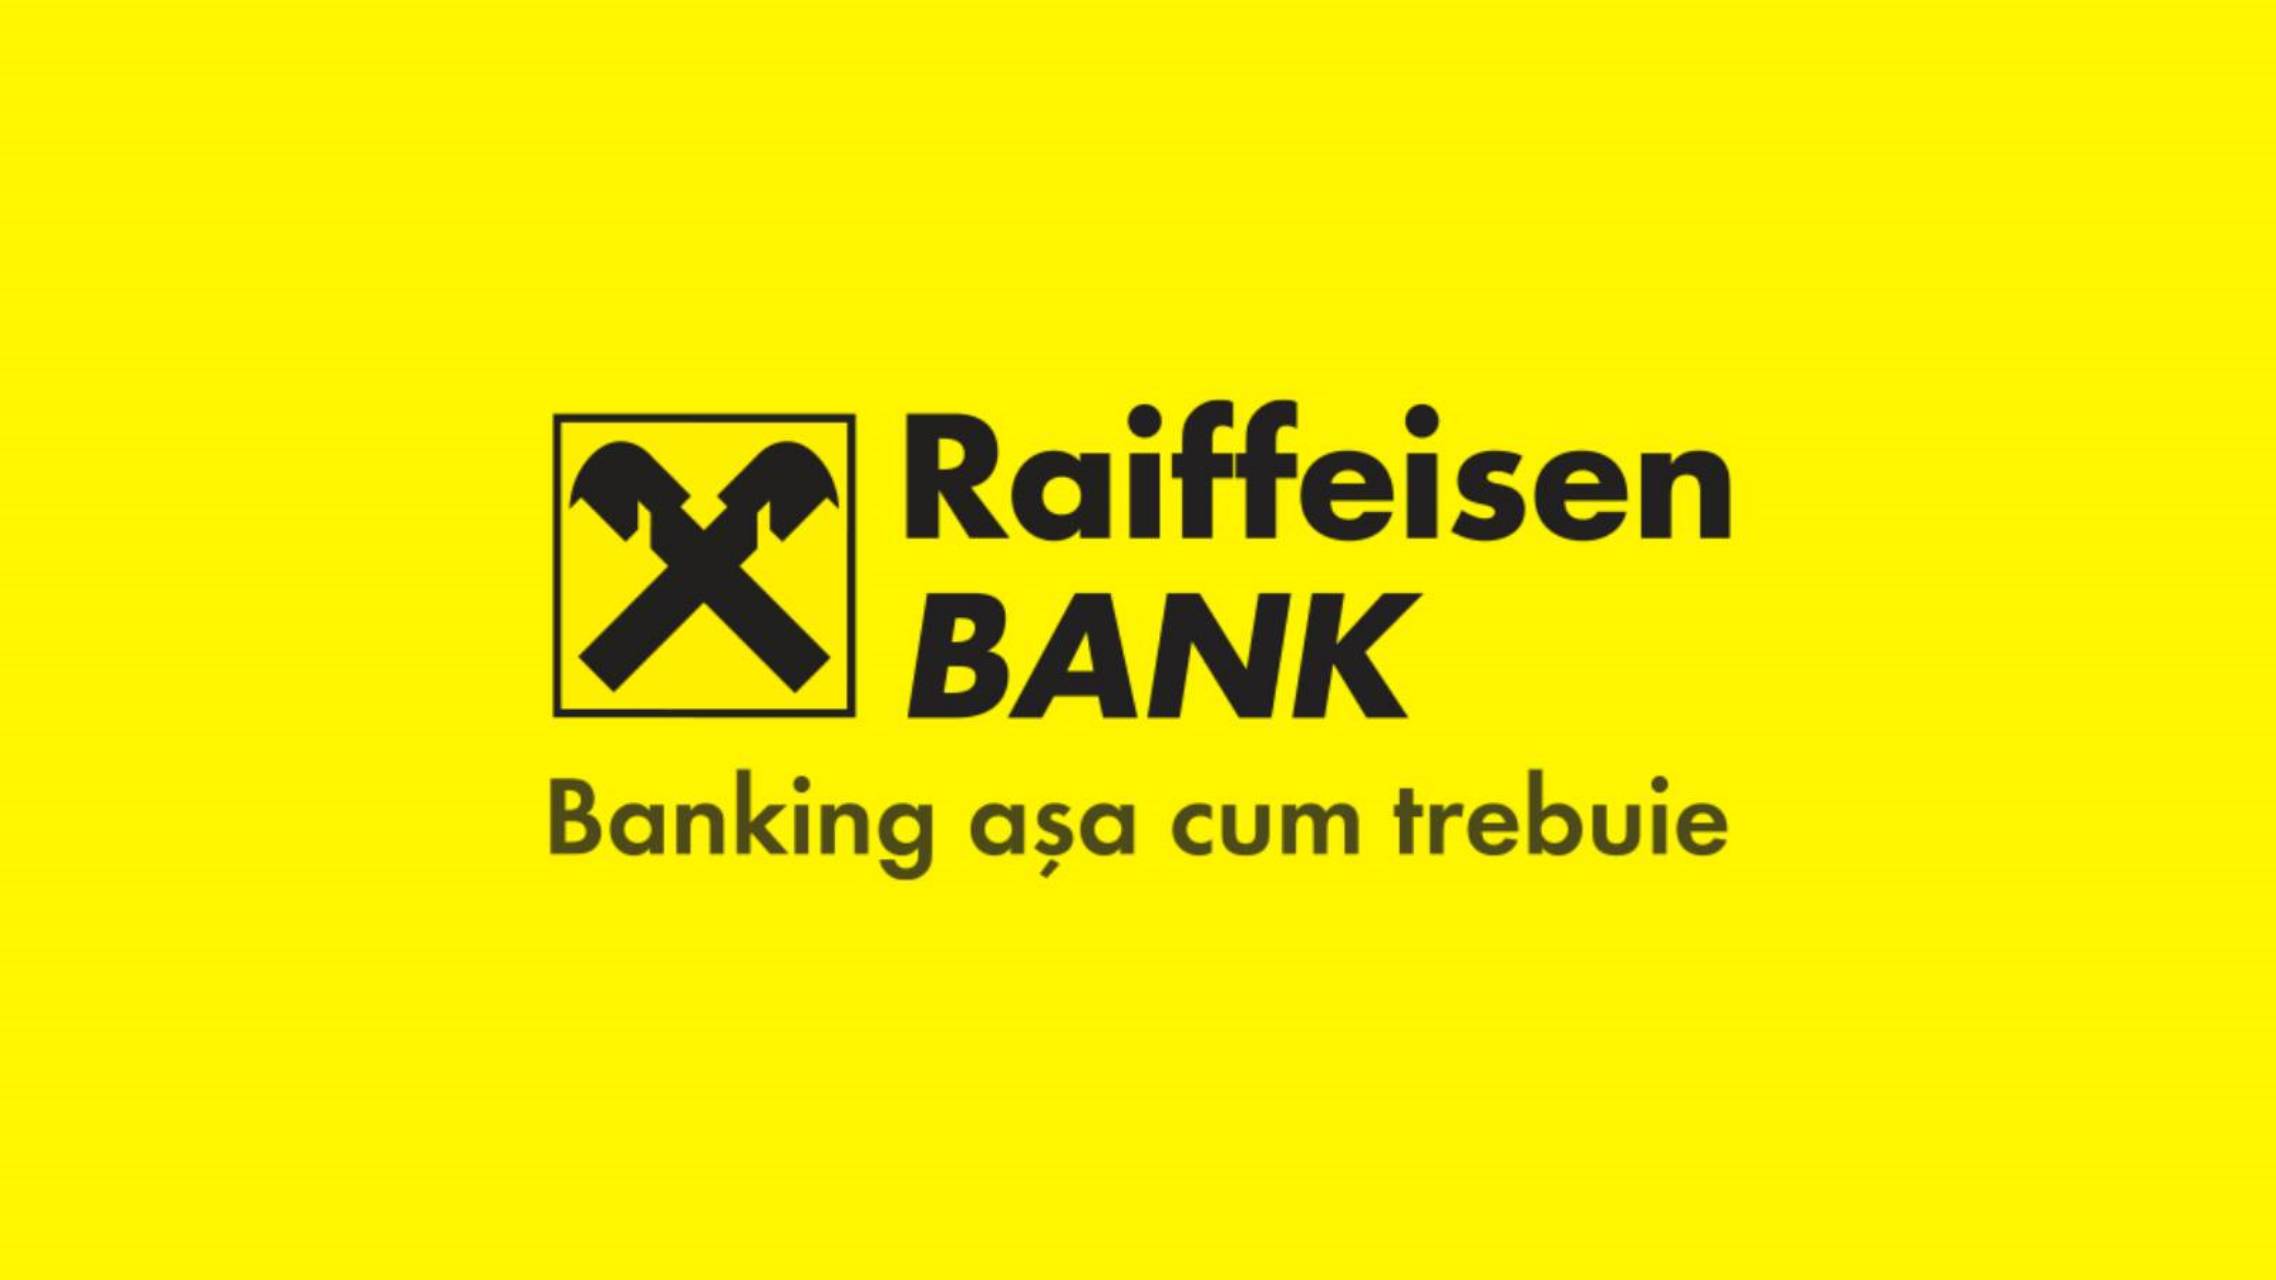 El banco Raiffeisen se separa